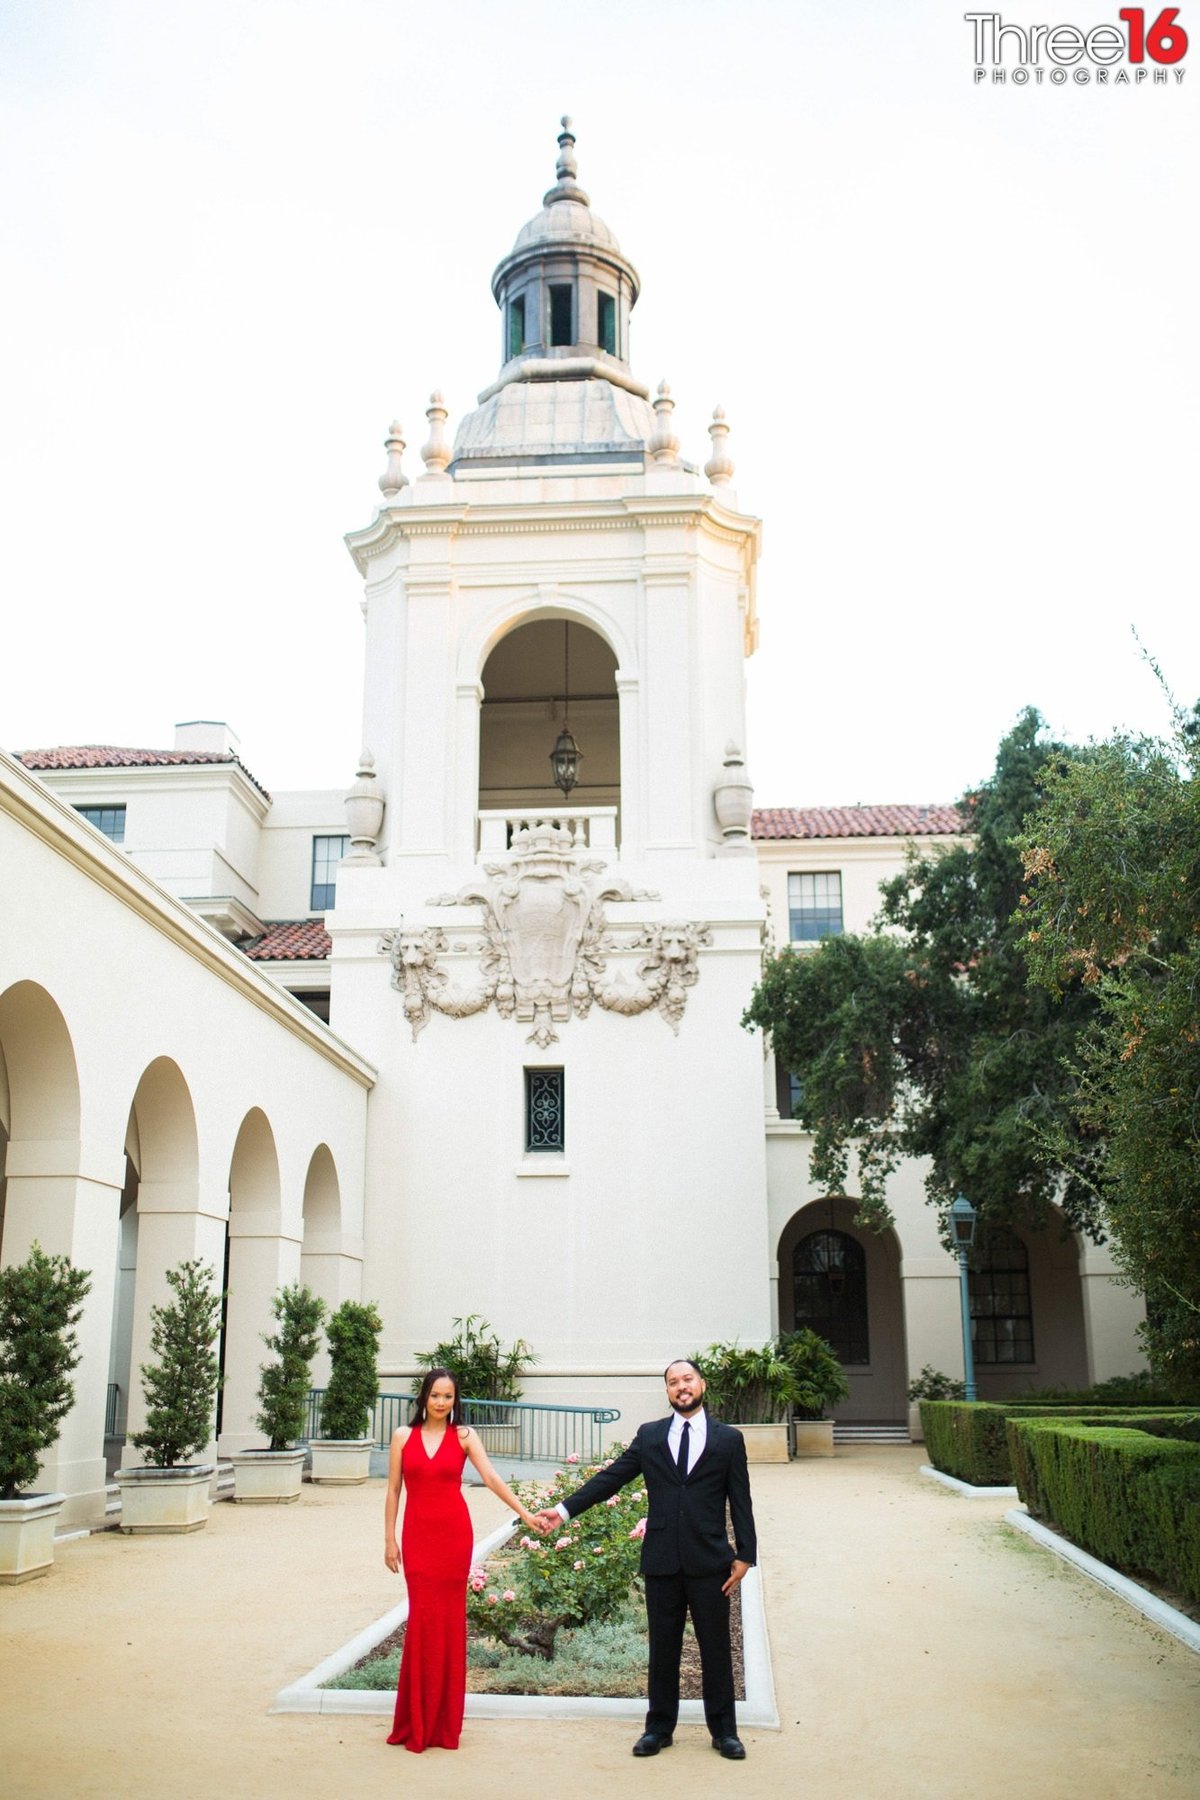 Pasadena City Hall Engagement Photos Los Angeles County Weddings Professional Photographer  Unique